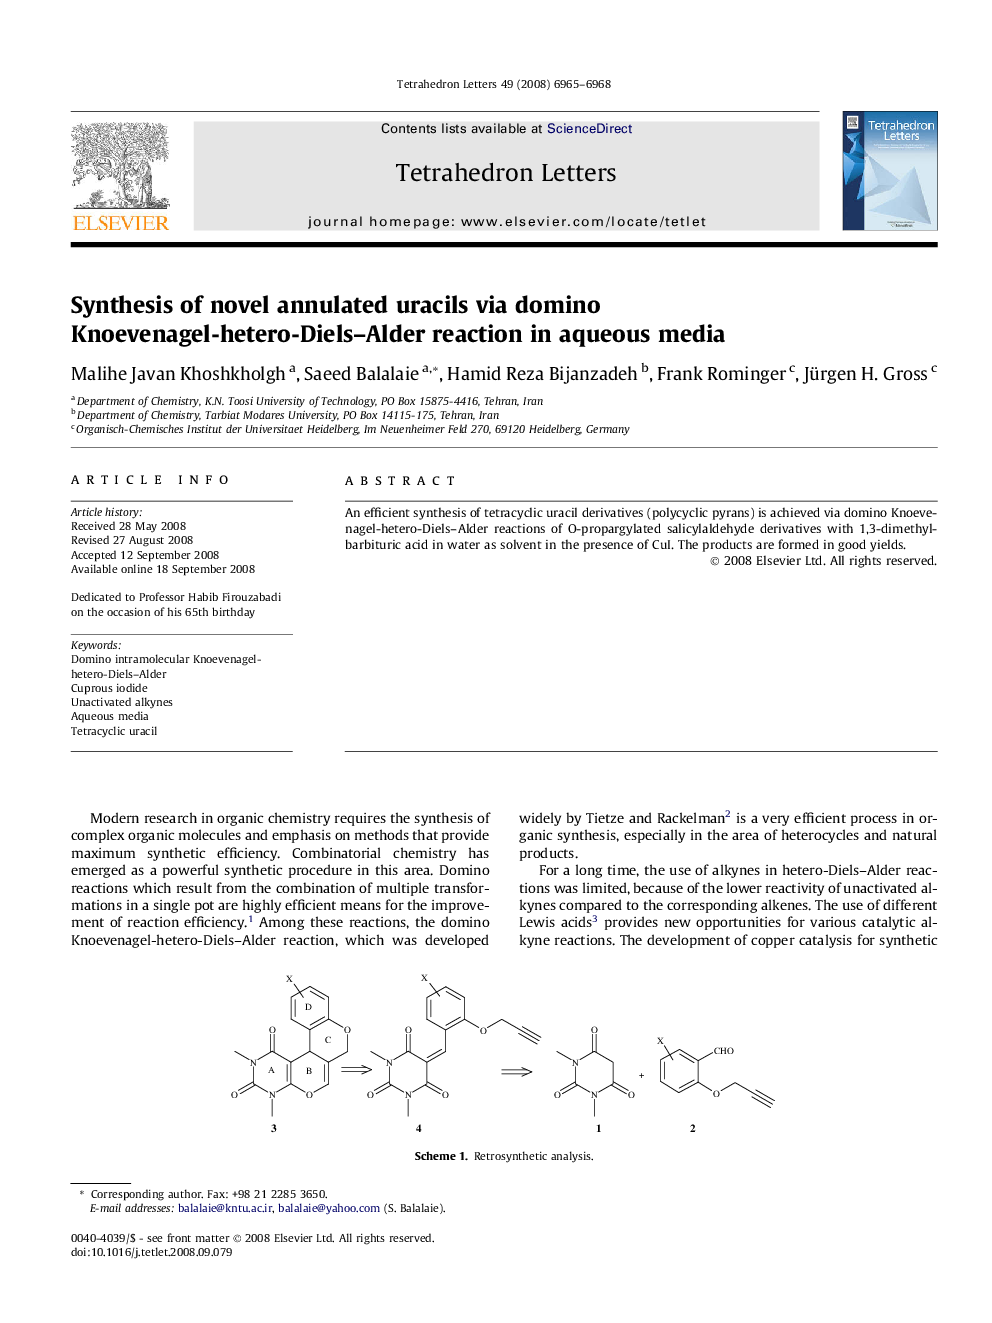 Synthesis of novel annulated uracils via domino Knoevenagel-hetero-Diels-Alder reaction in aqueous media